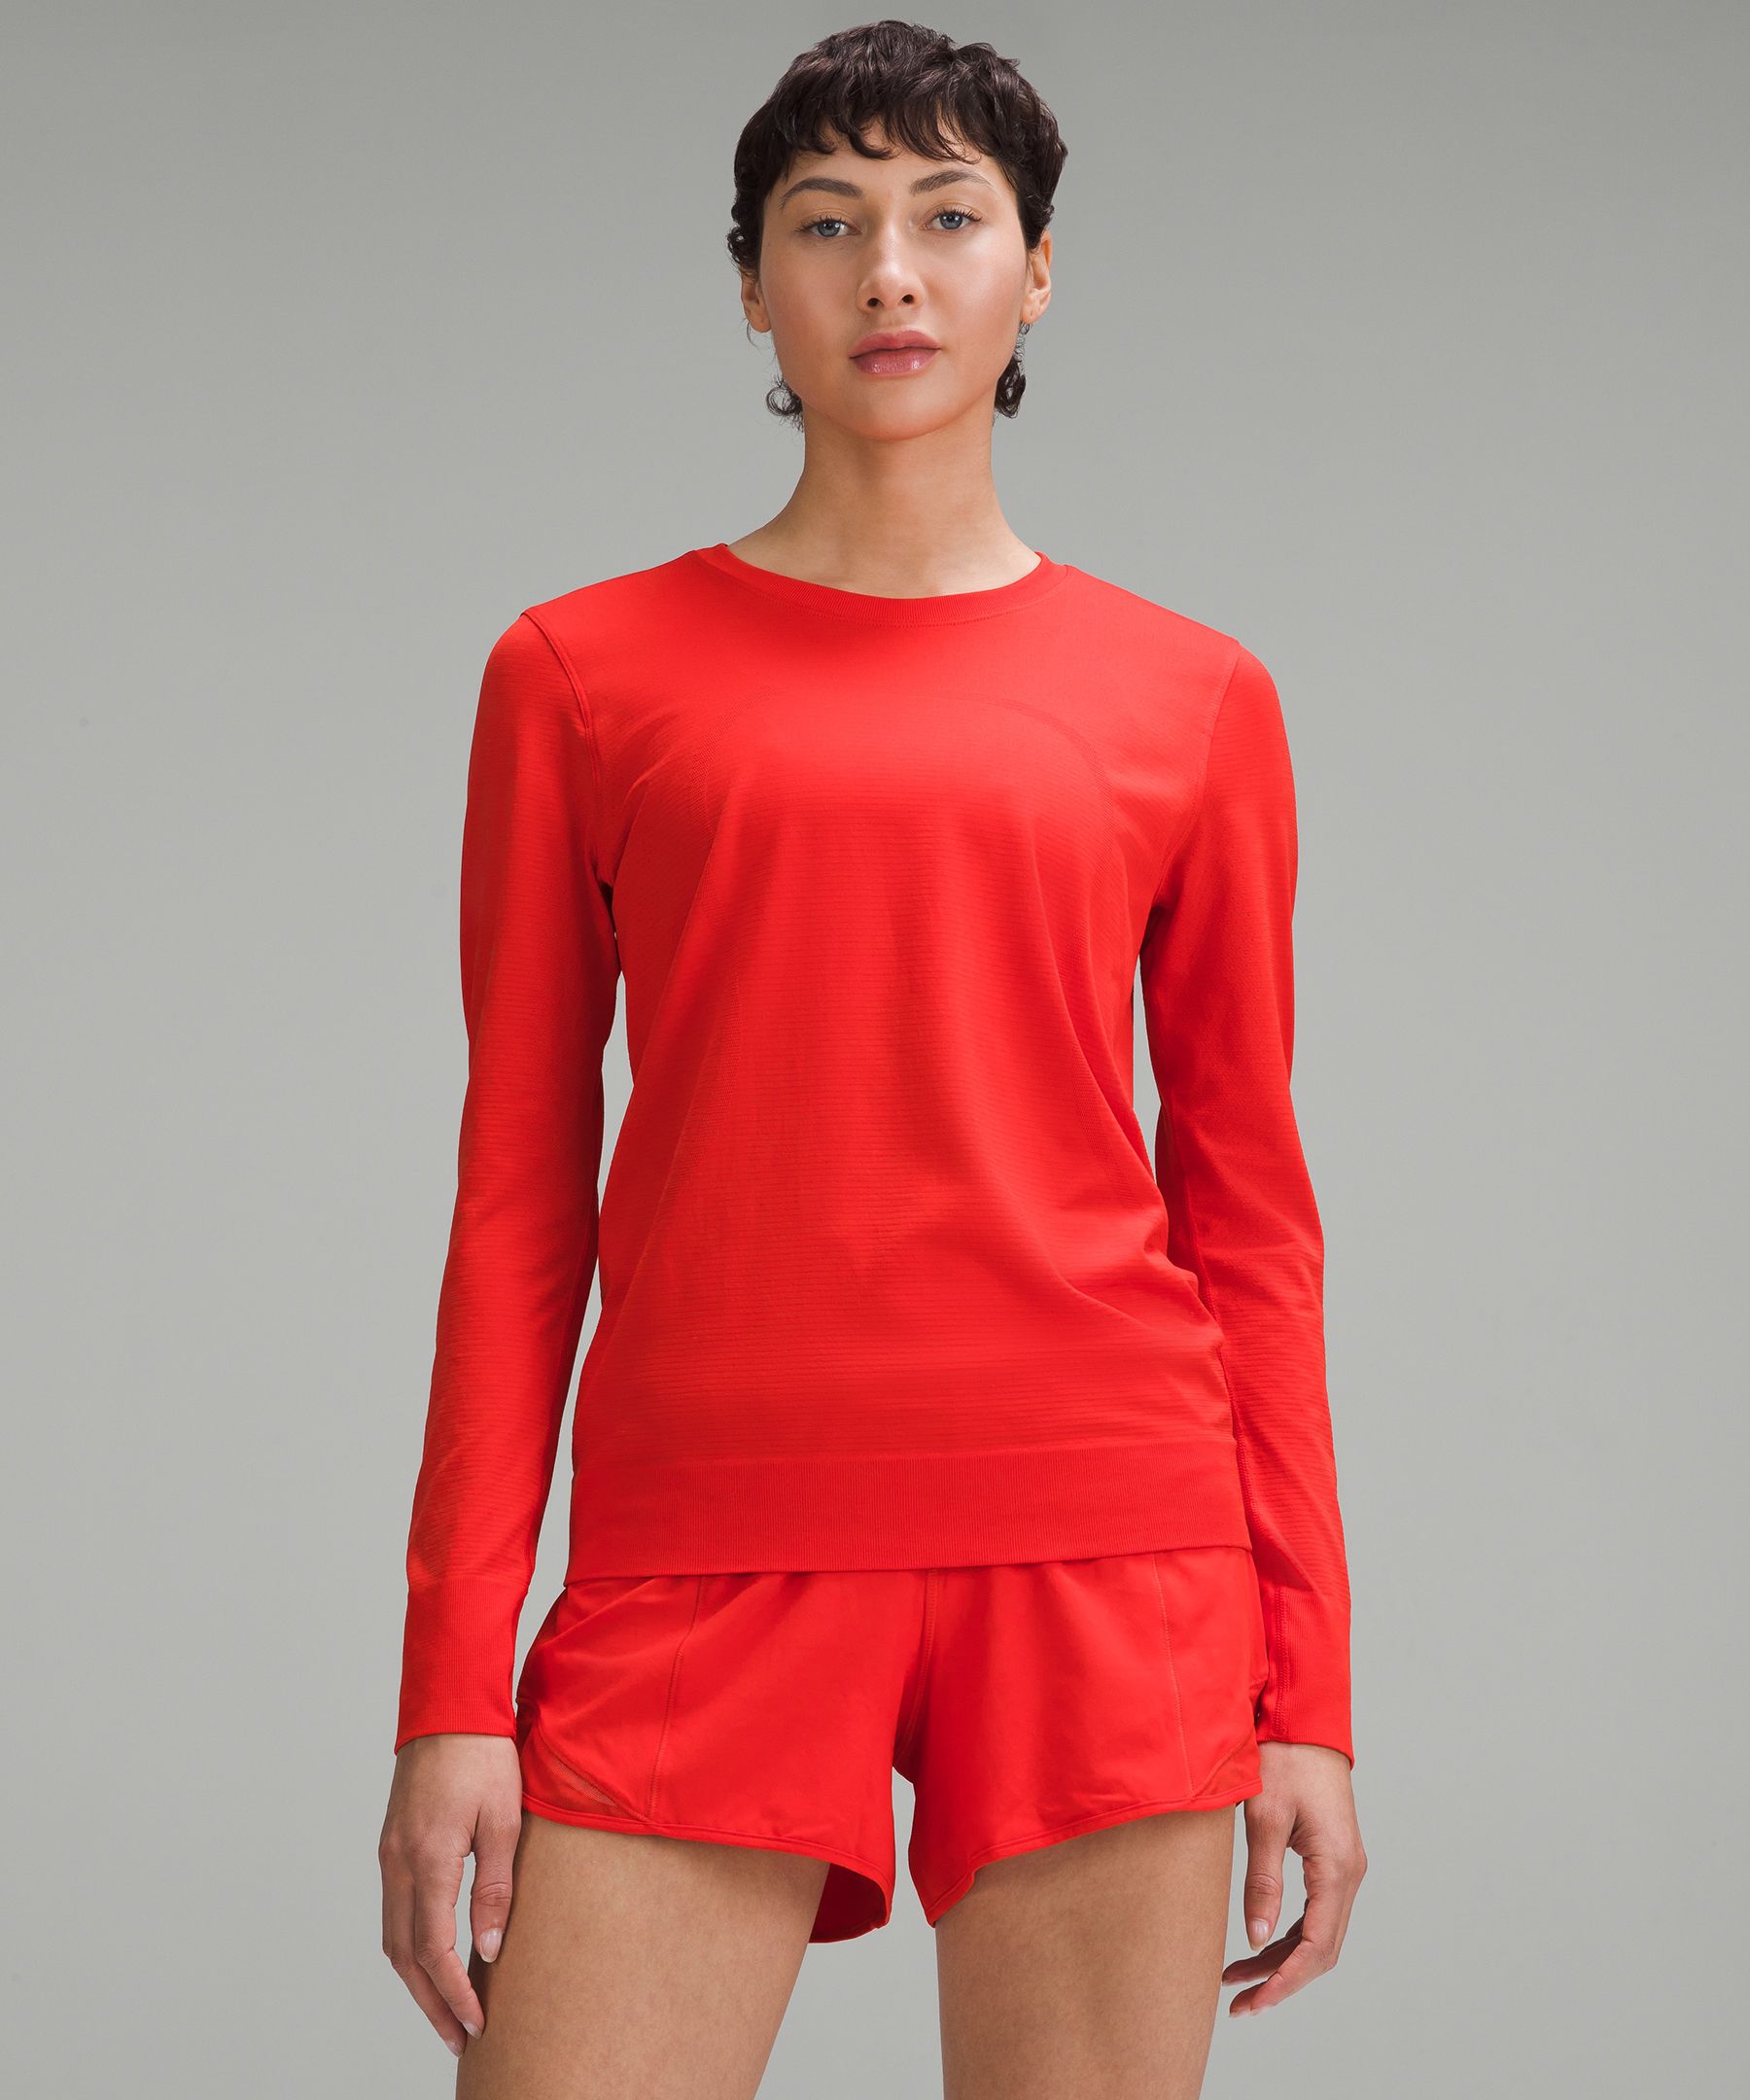 Lululemon athletica Swiftly Tech Cropped Long-Sleeve Shirt 2.0